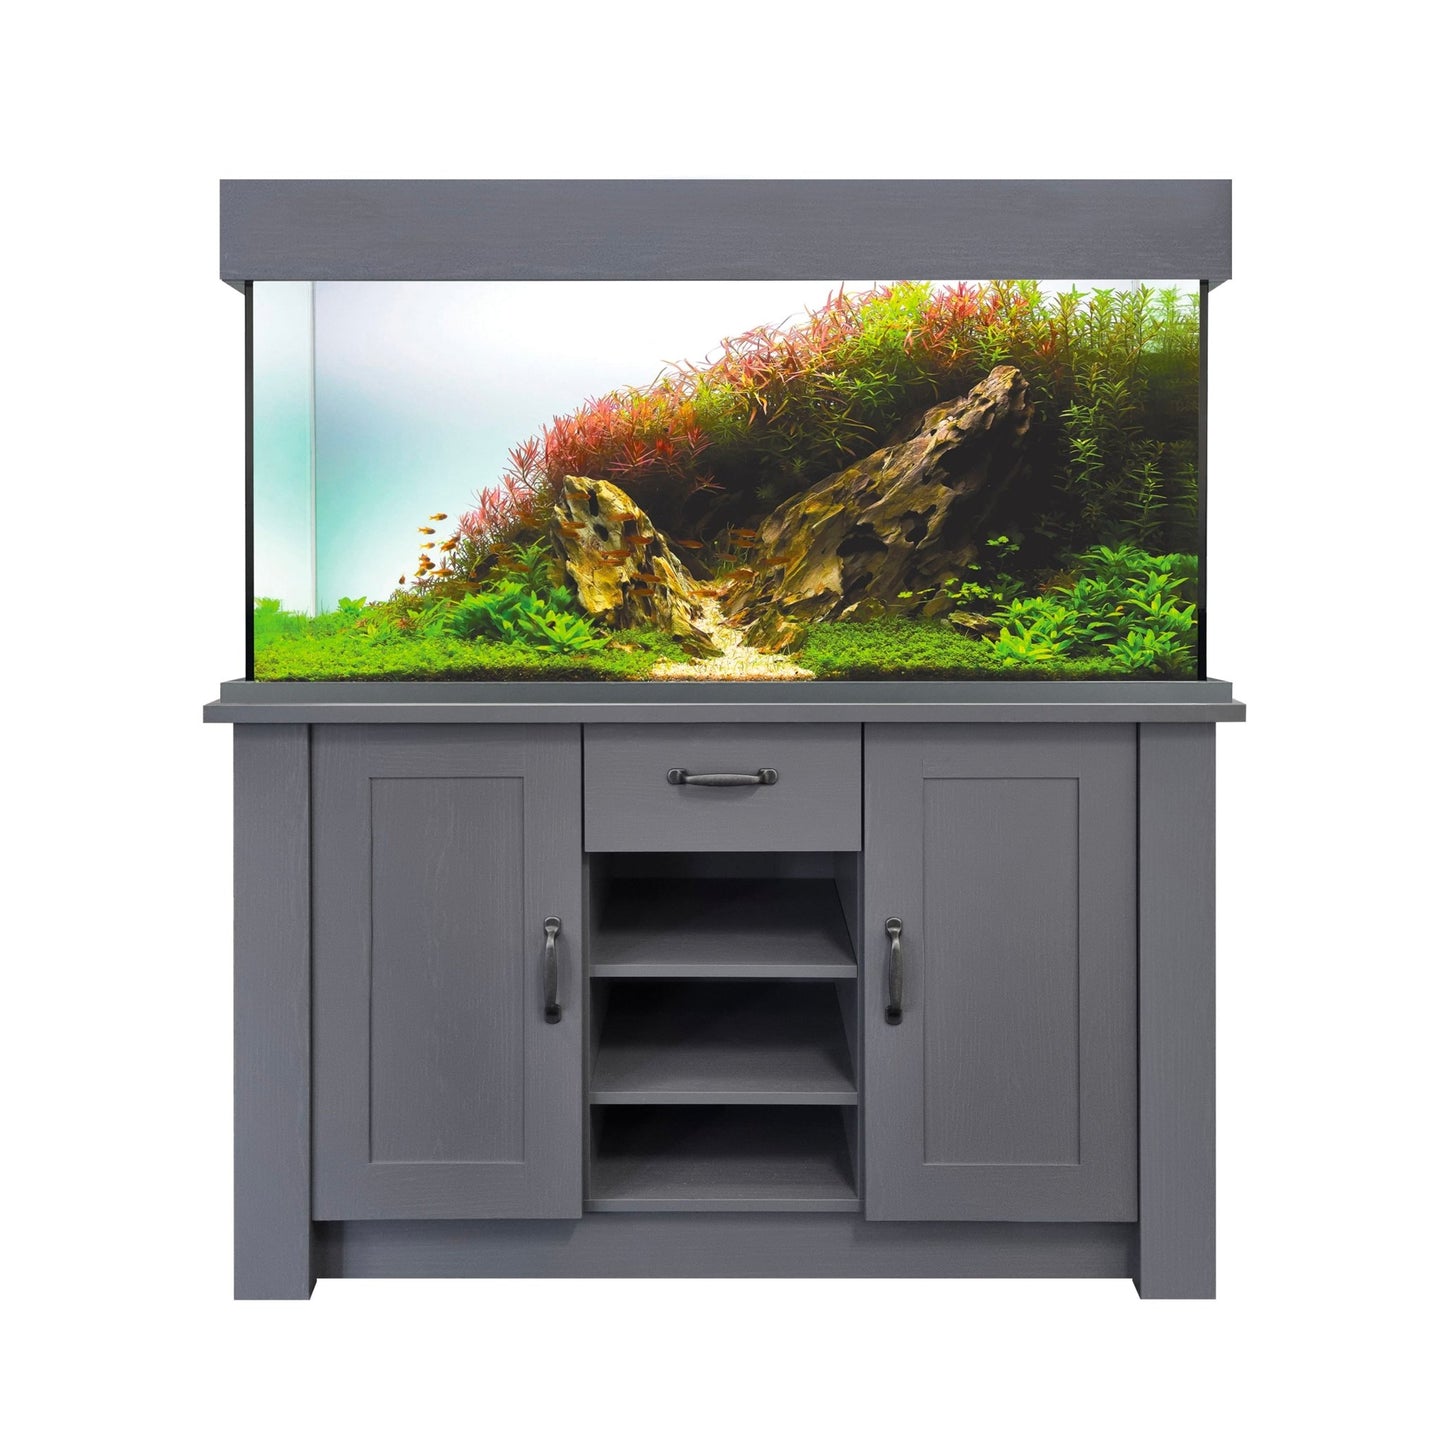 Aqua One OakStyle 230 Aquarium and Cabinet (Slate Grey) - Charterhouse Aquatics